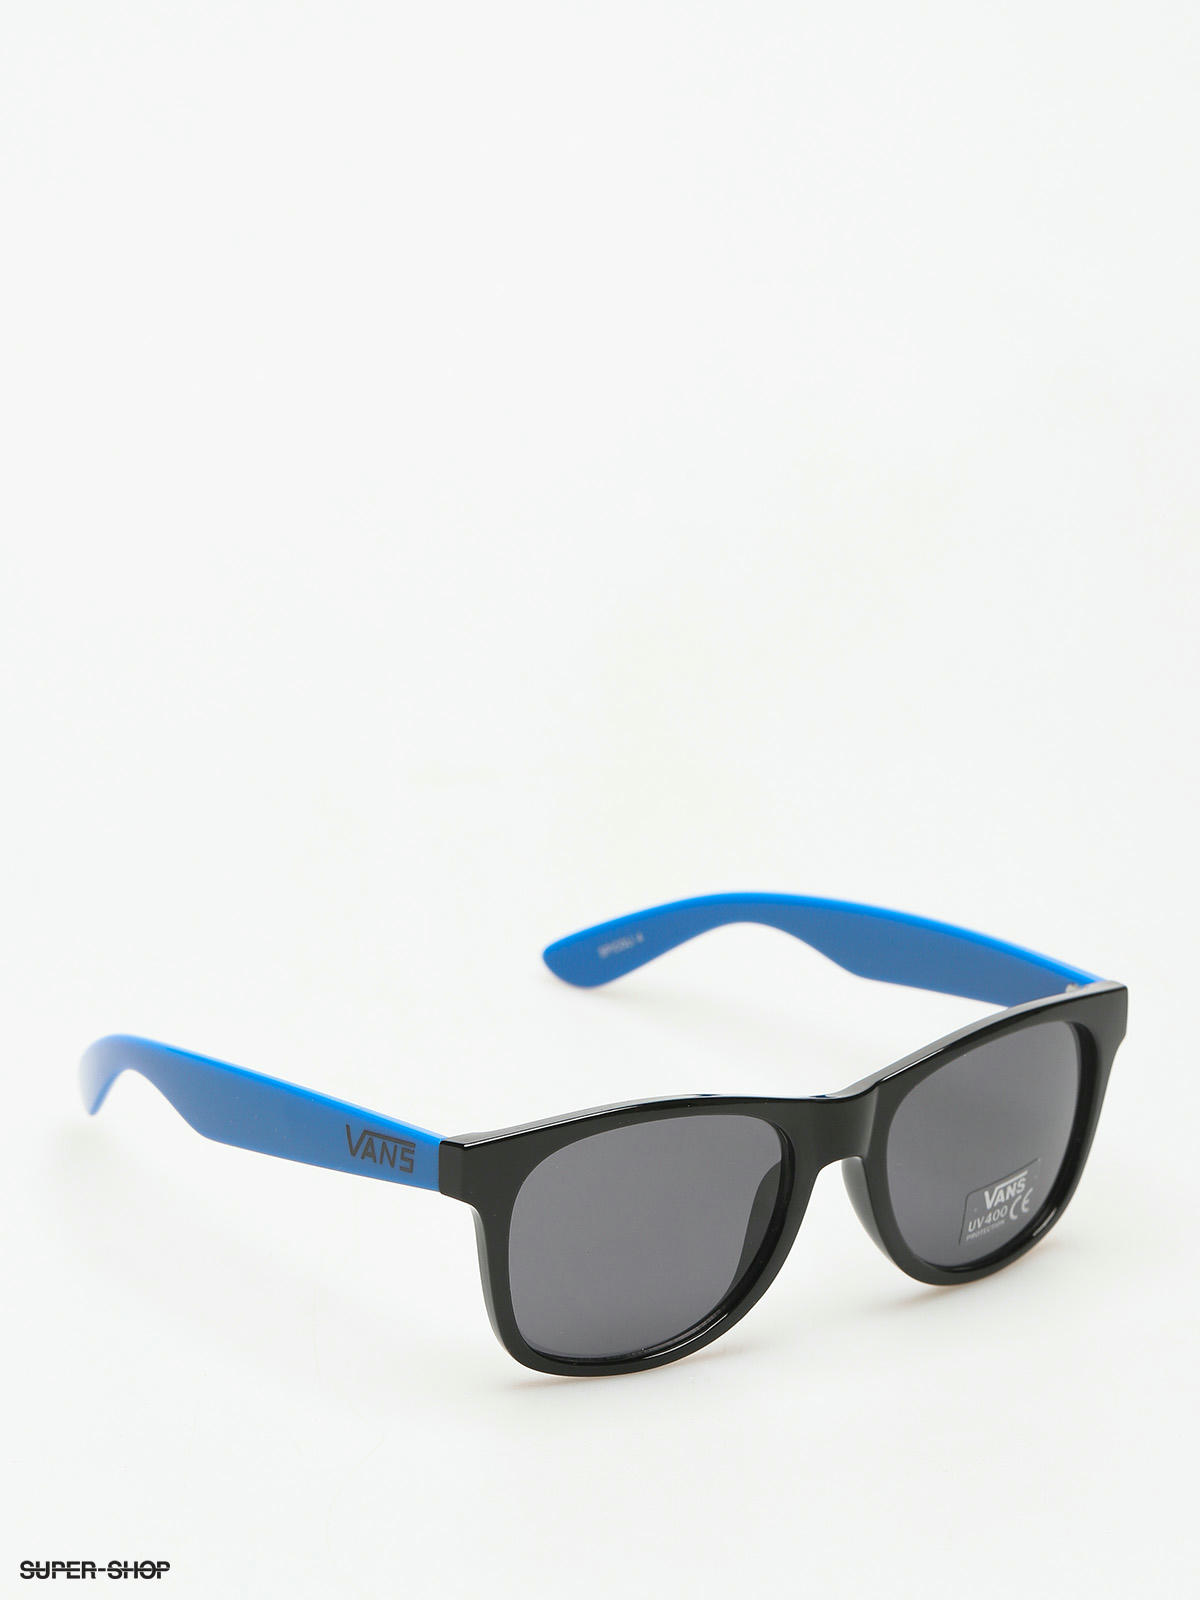 vans sunglasses blue